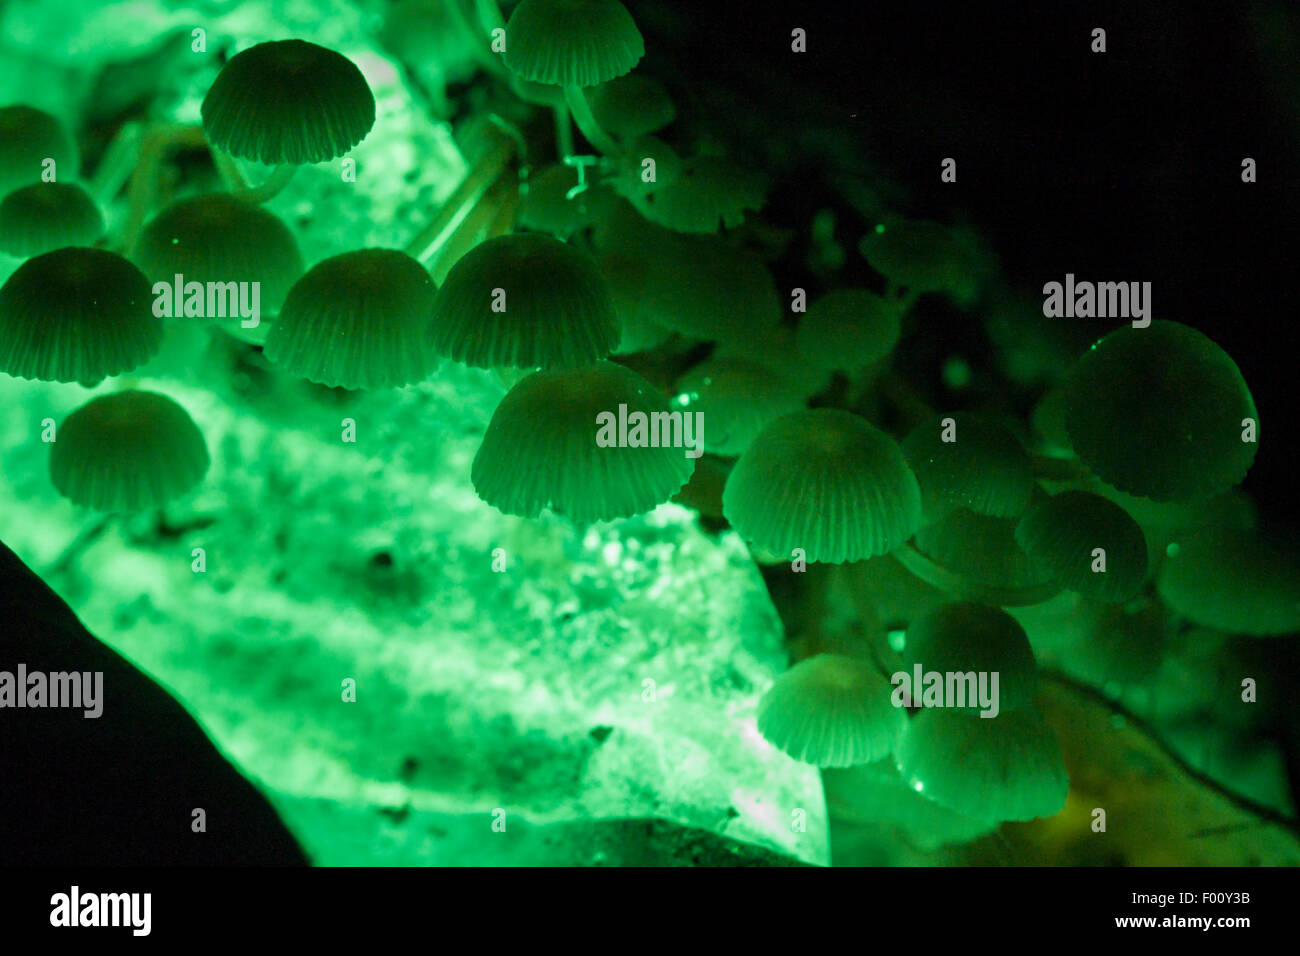 Green bioluminescent fungi on the rainforest floor. Stock Photo